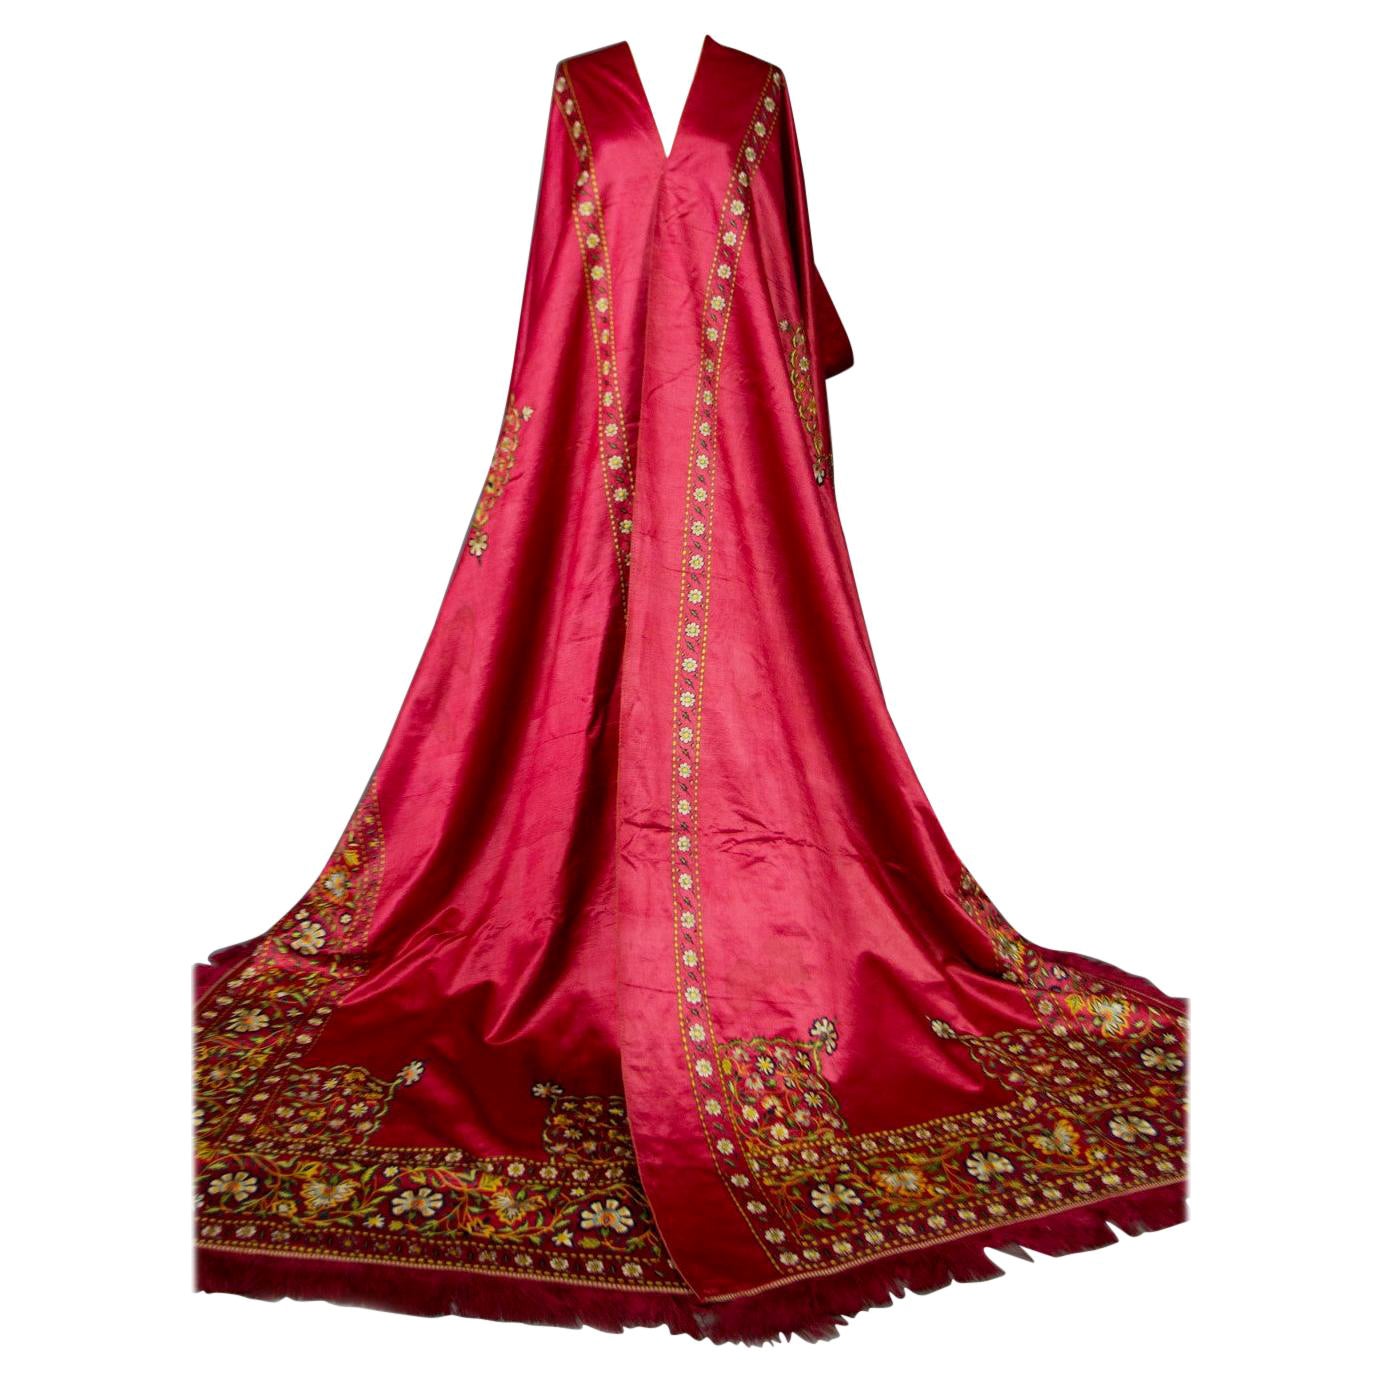 Tenda indiana o mantovana lunga in raso ricamato in stile Mughal - XIX secolo